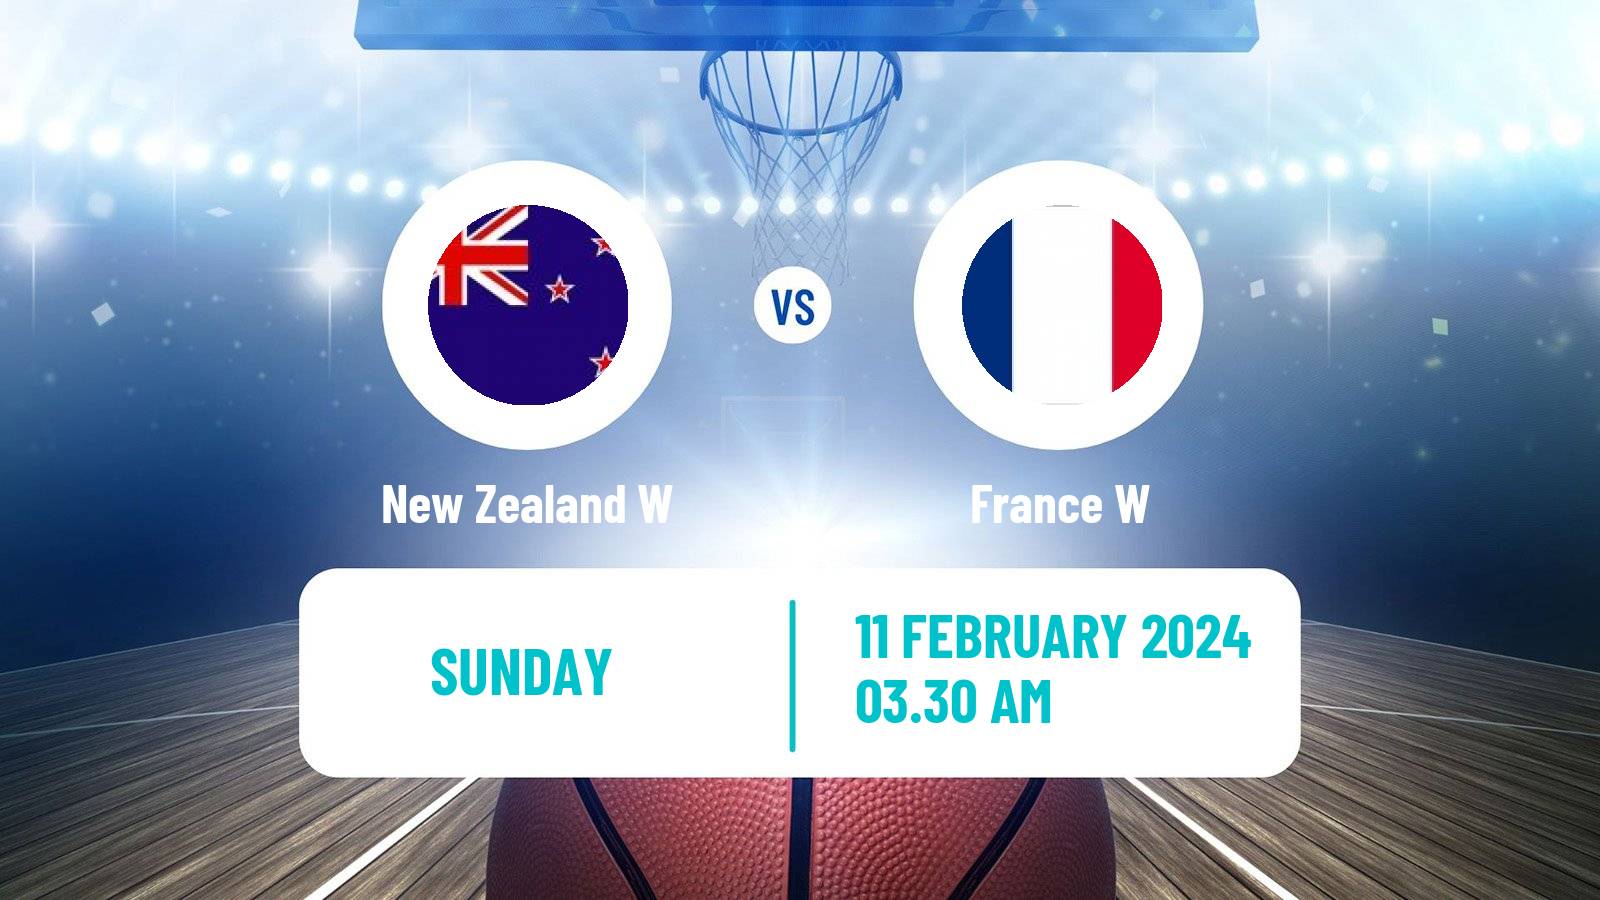 Basketball Olympic Games - Basketball Women New Zealand W - France W